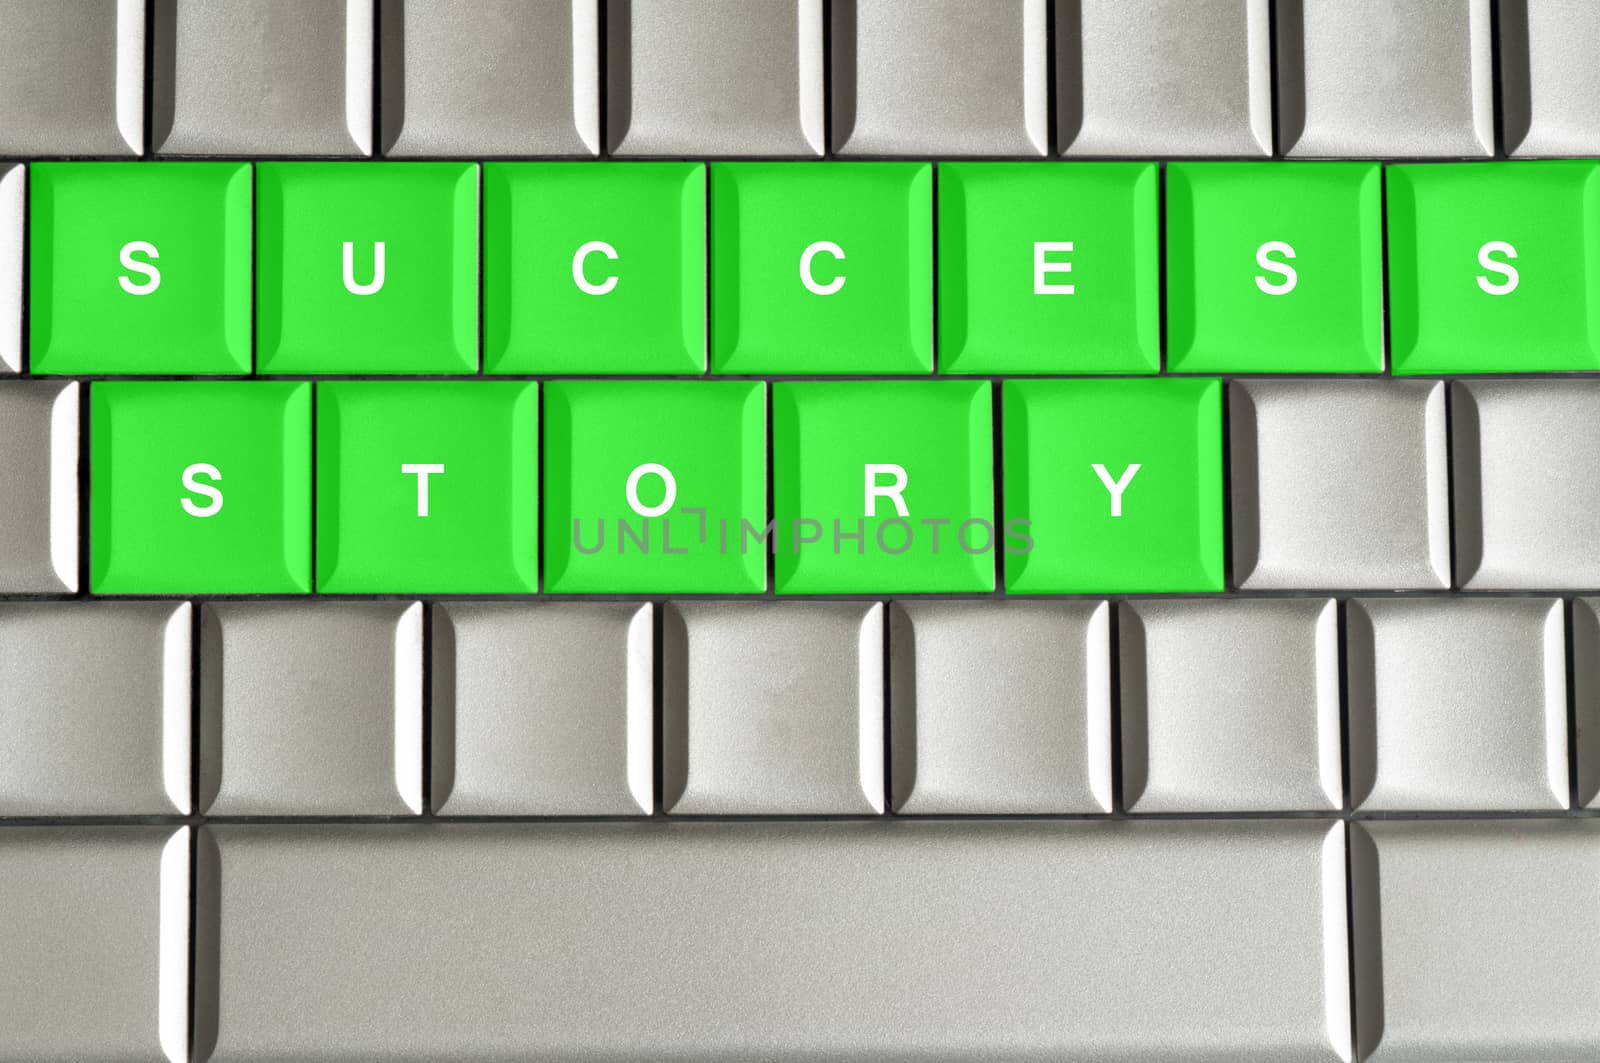 Success Story word spelled on a metallic keyboard